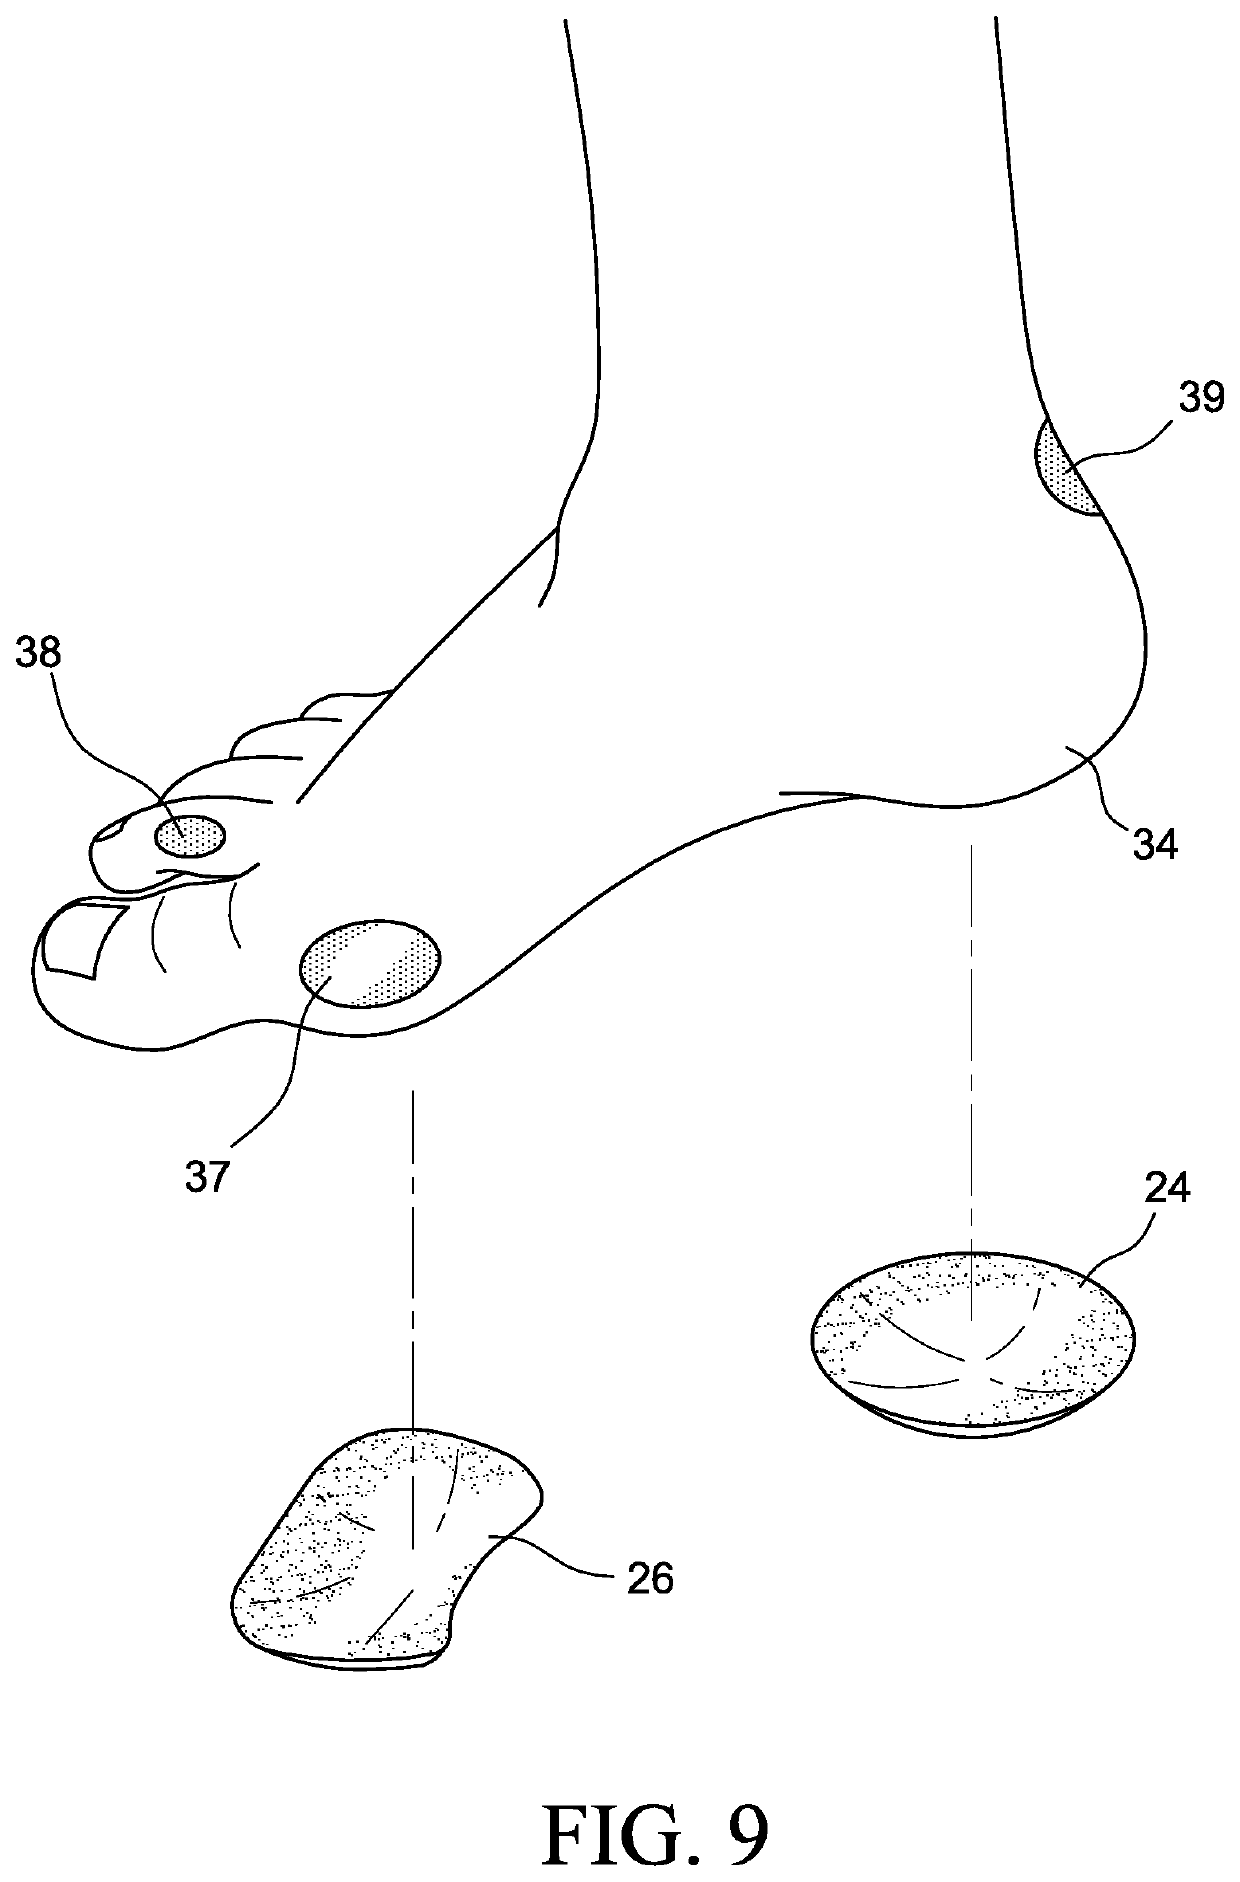 Foot prosthetic